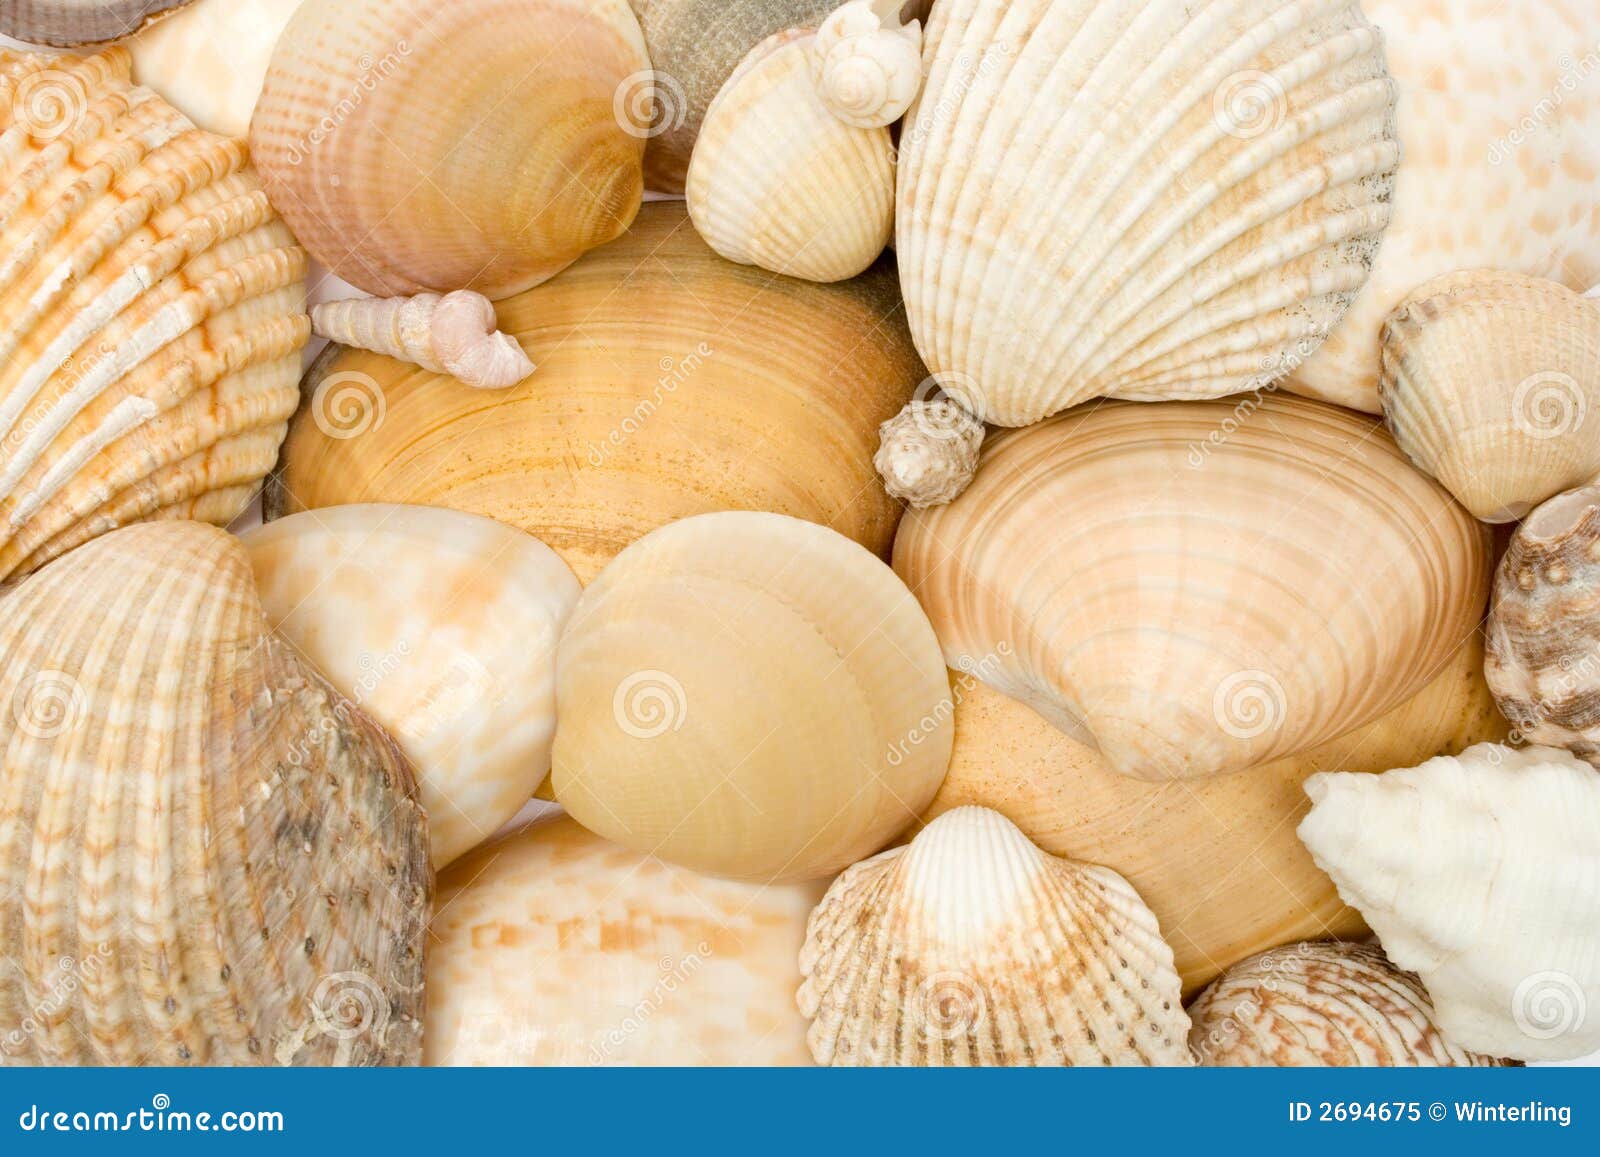 various seashells